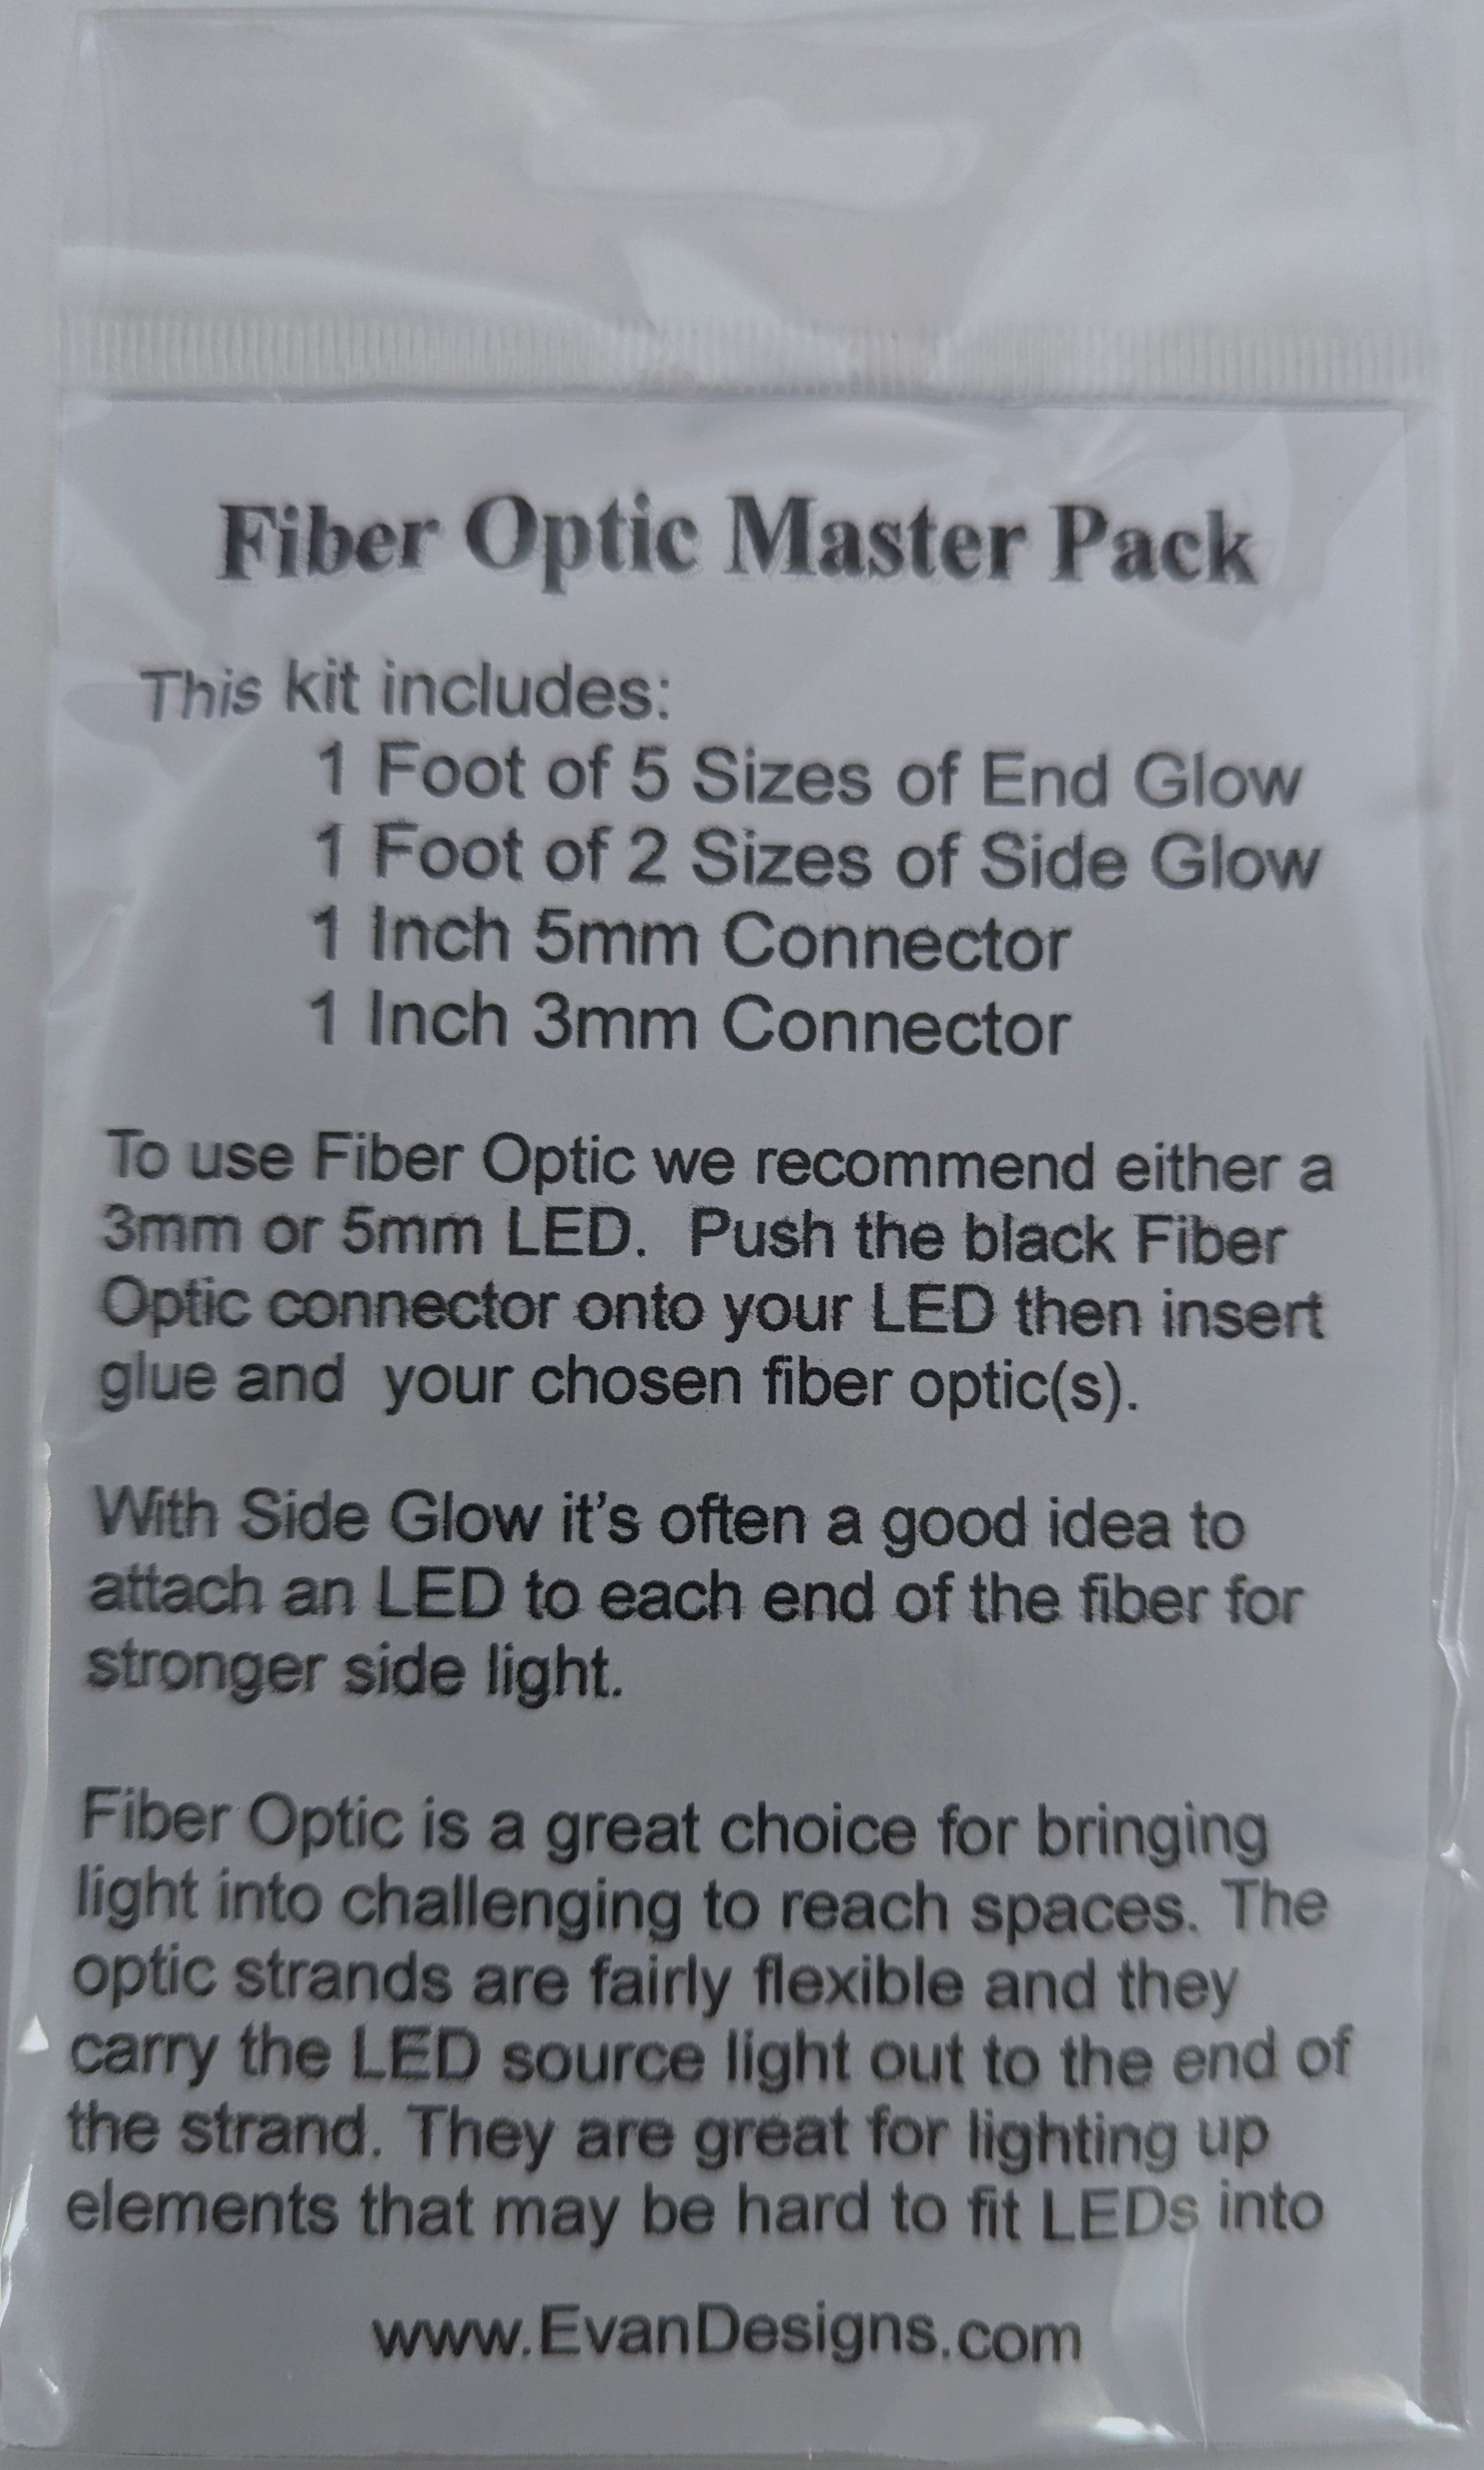 Fiber Optic Master Pack